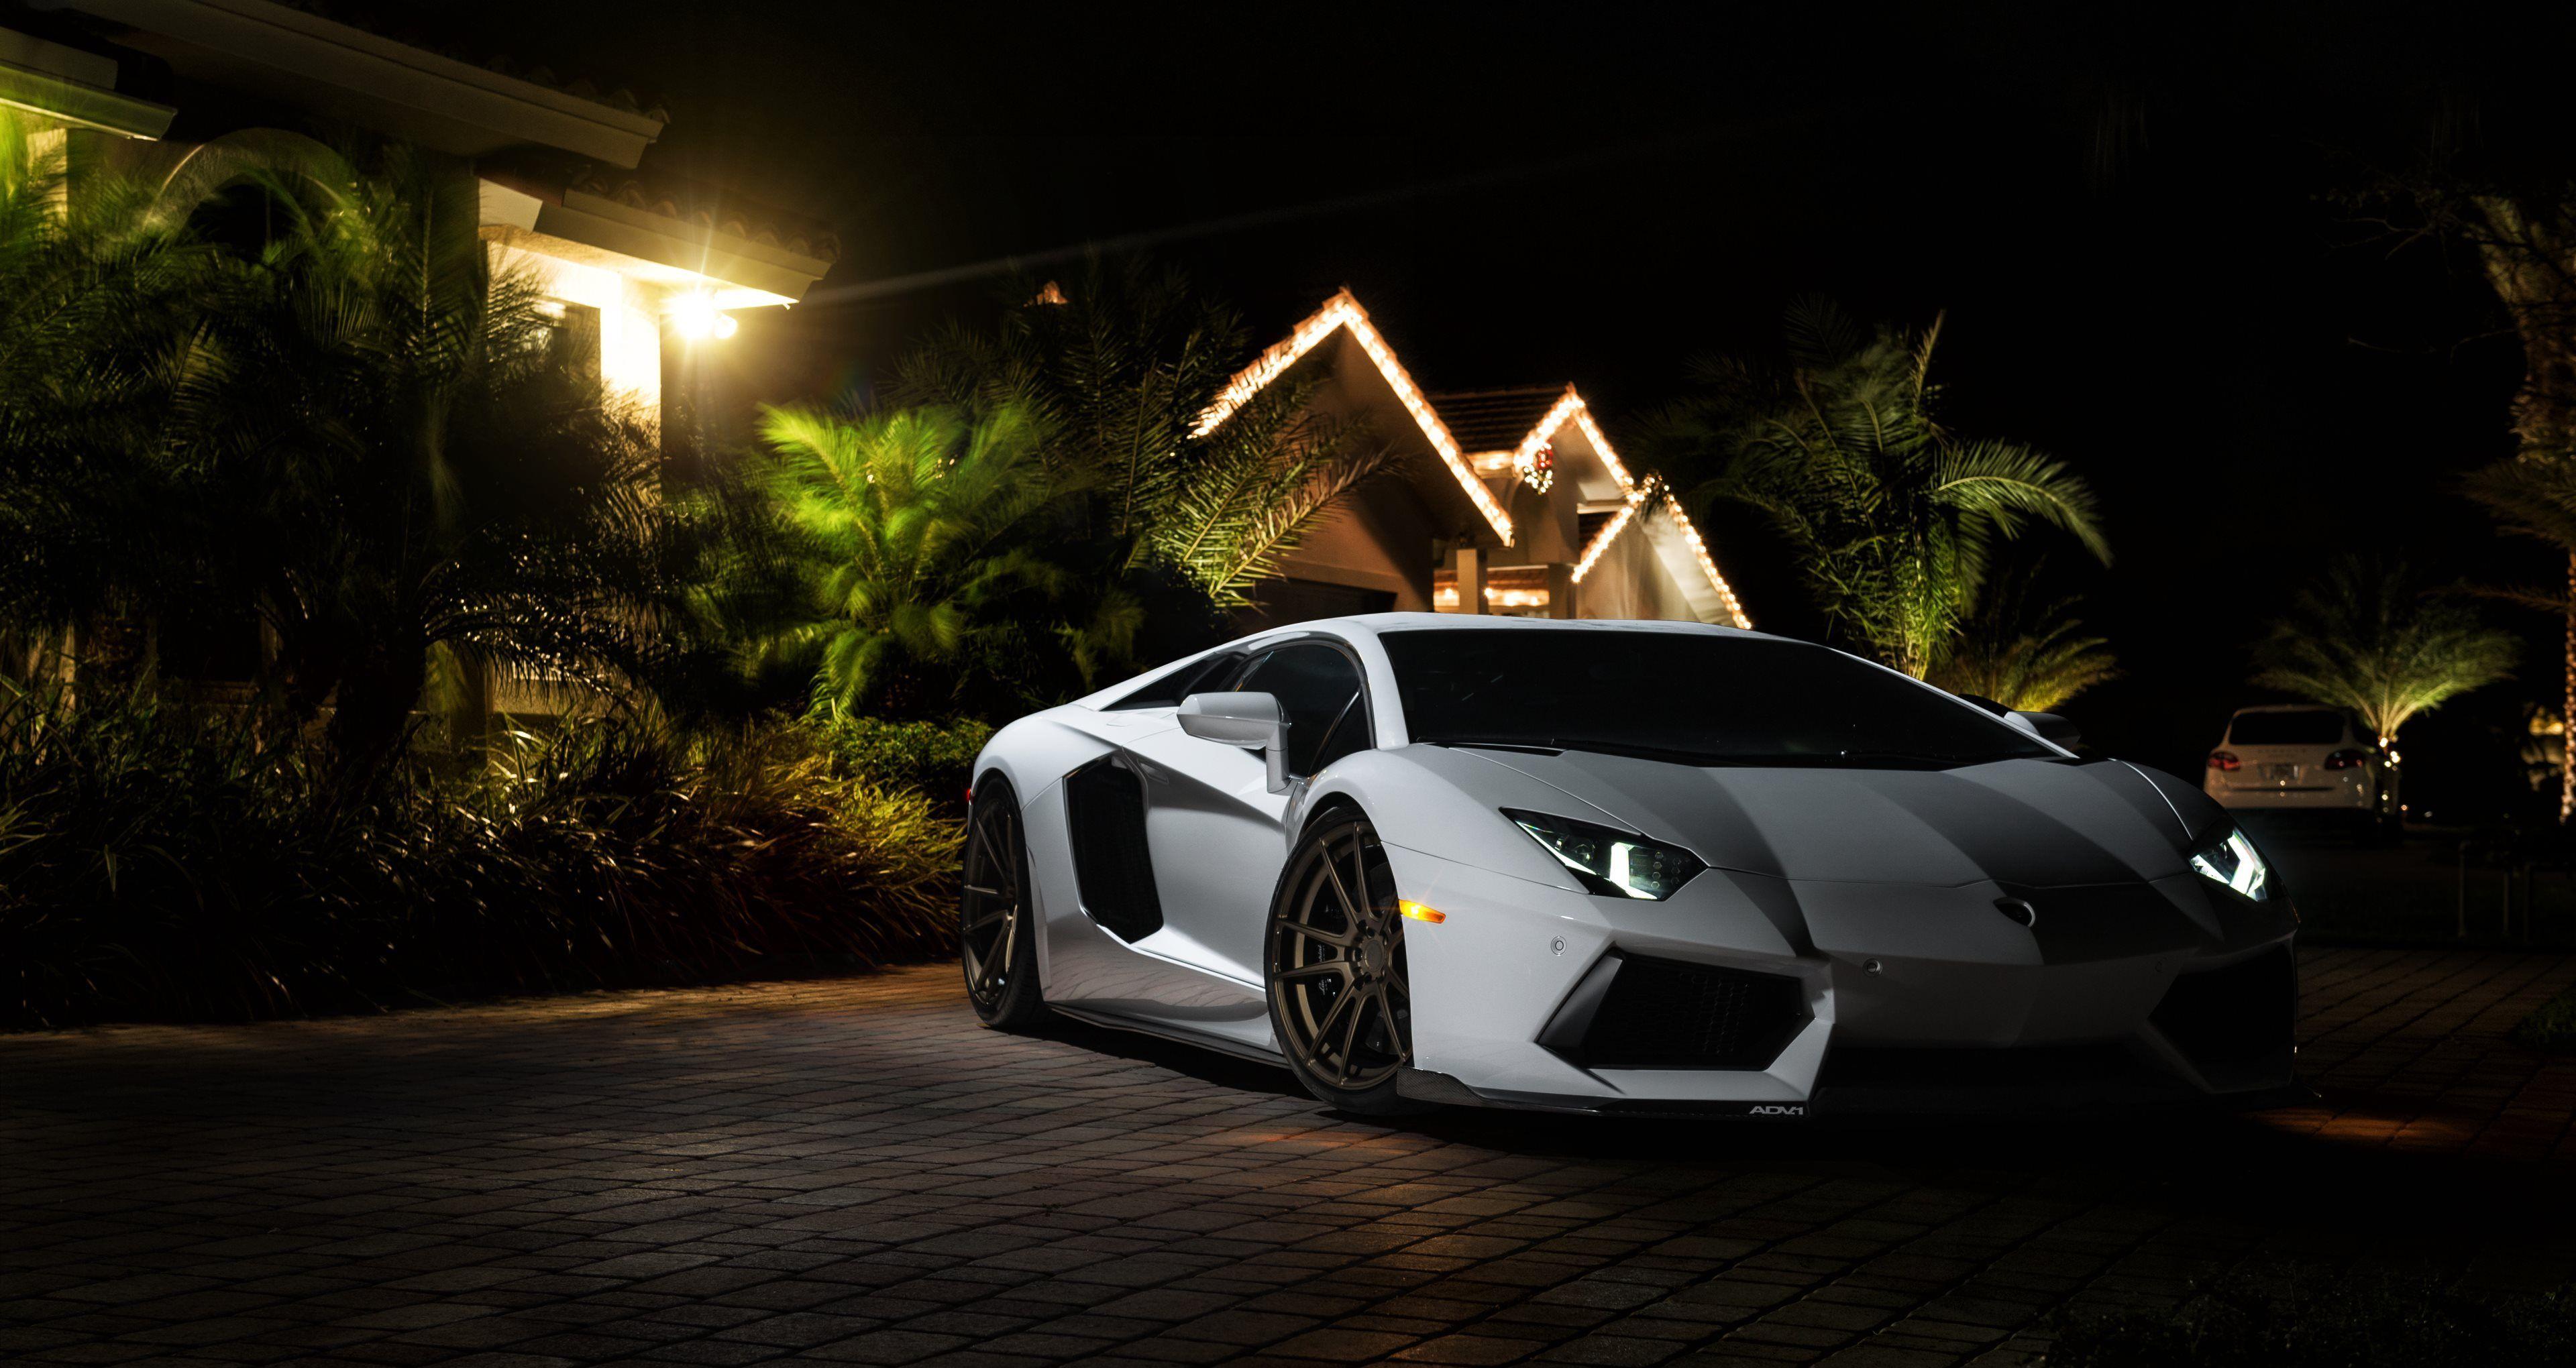 Lamborghini Aventador at Night Wallpaper and Background